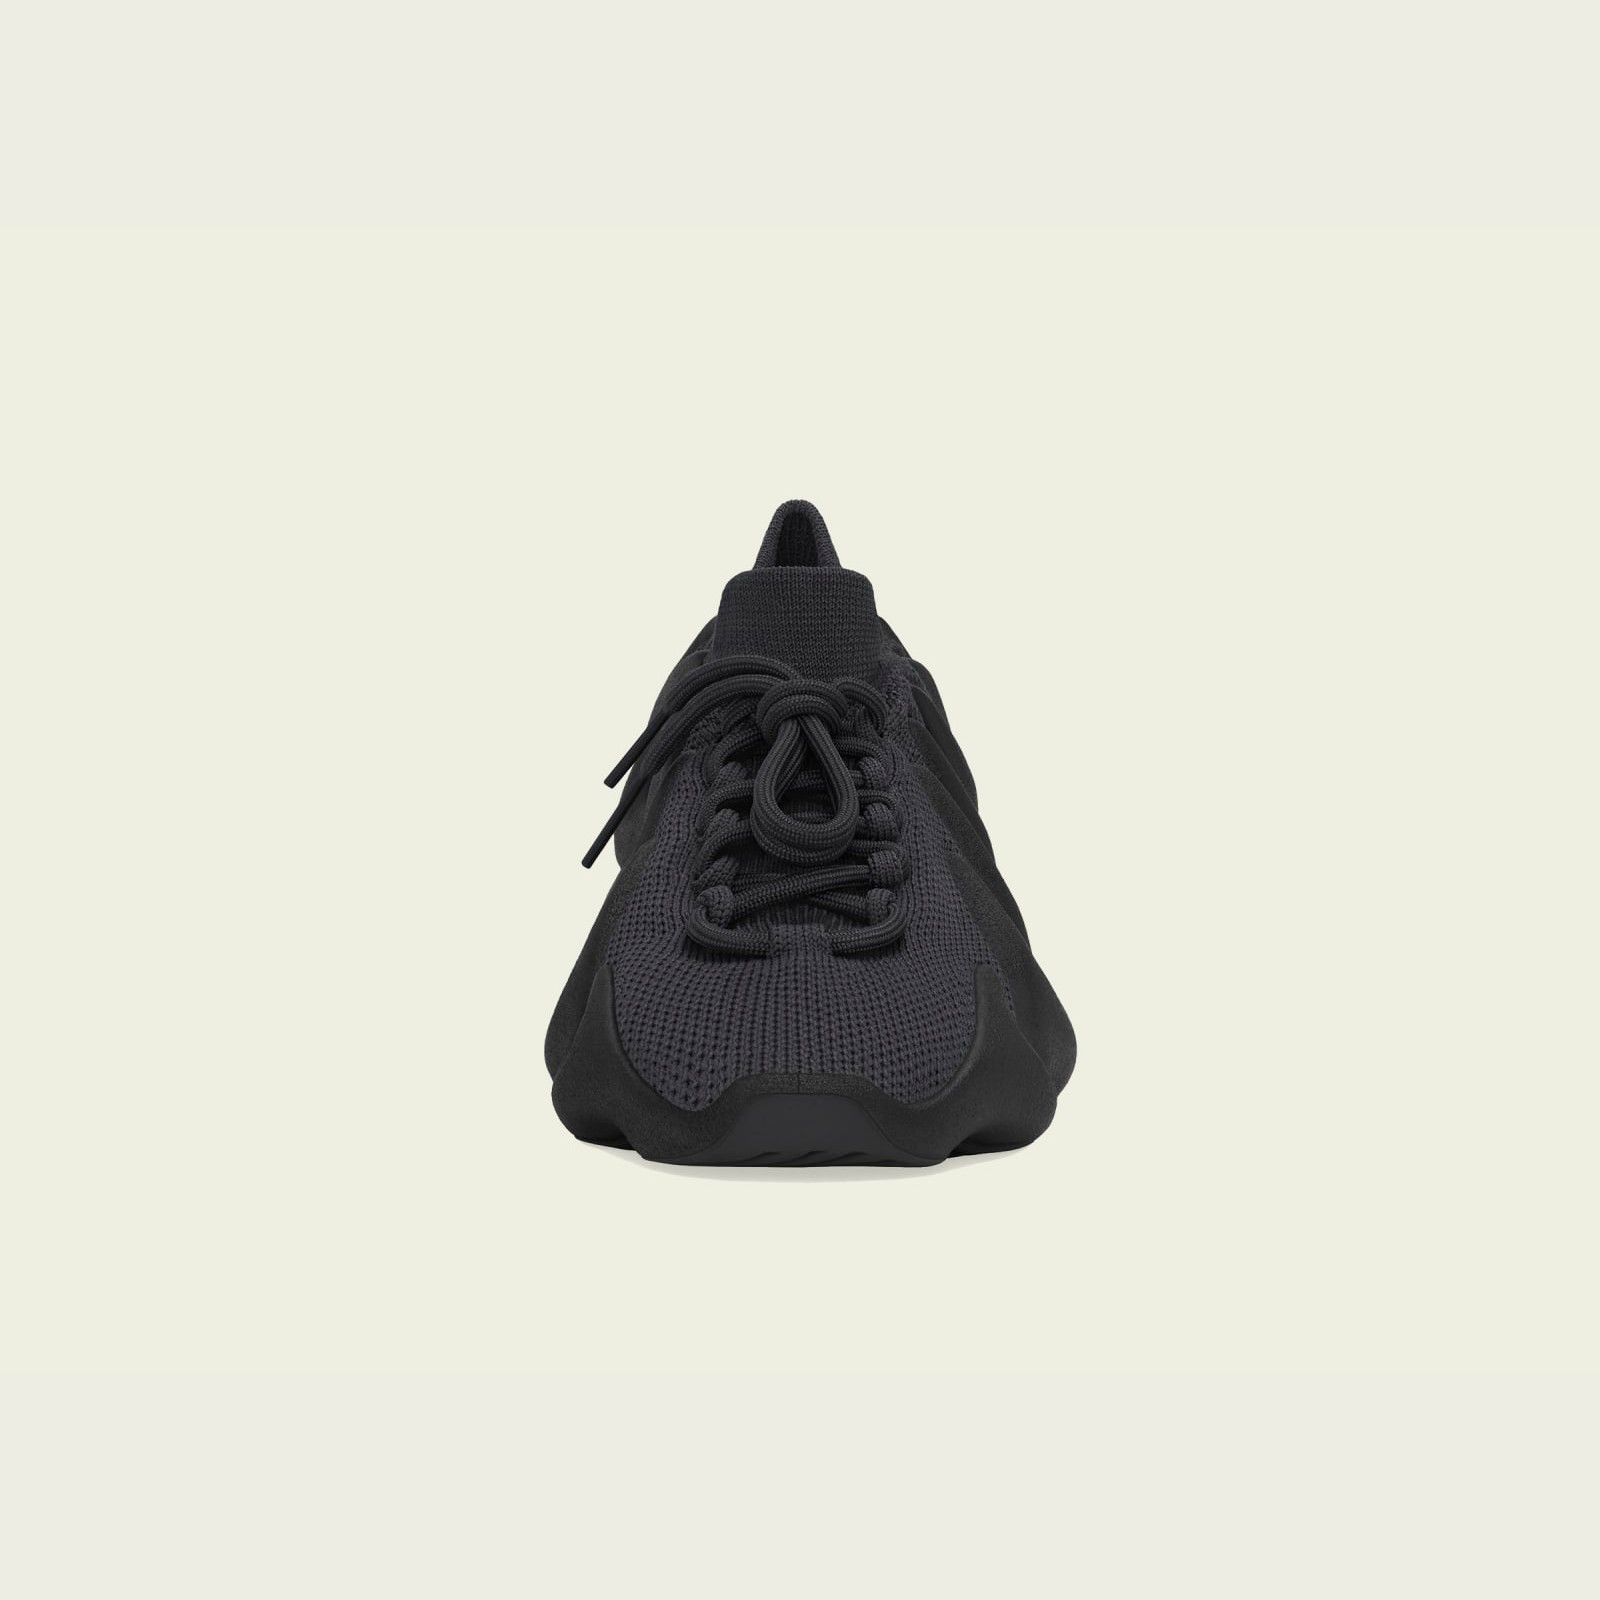 Adidas Yeezy 450
« Utility Black »